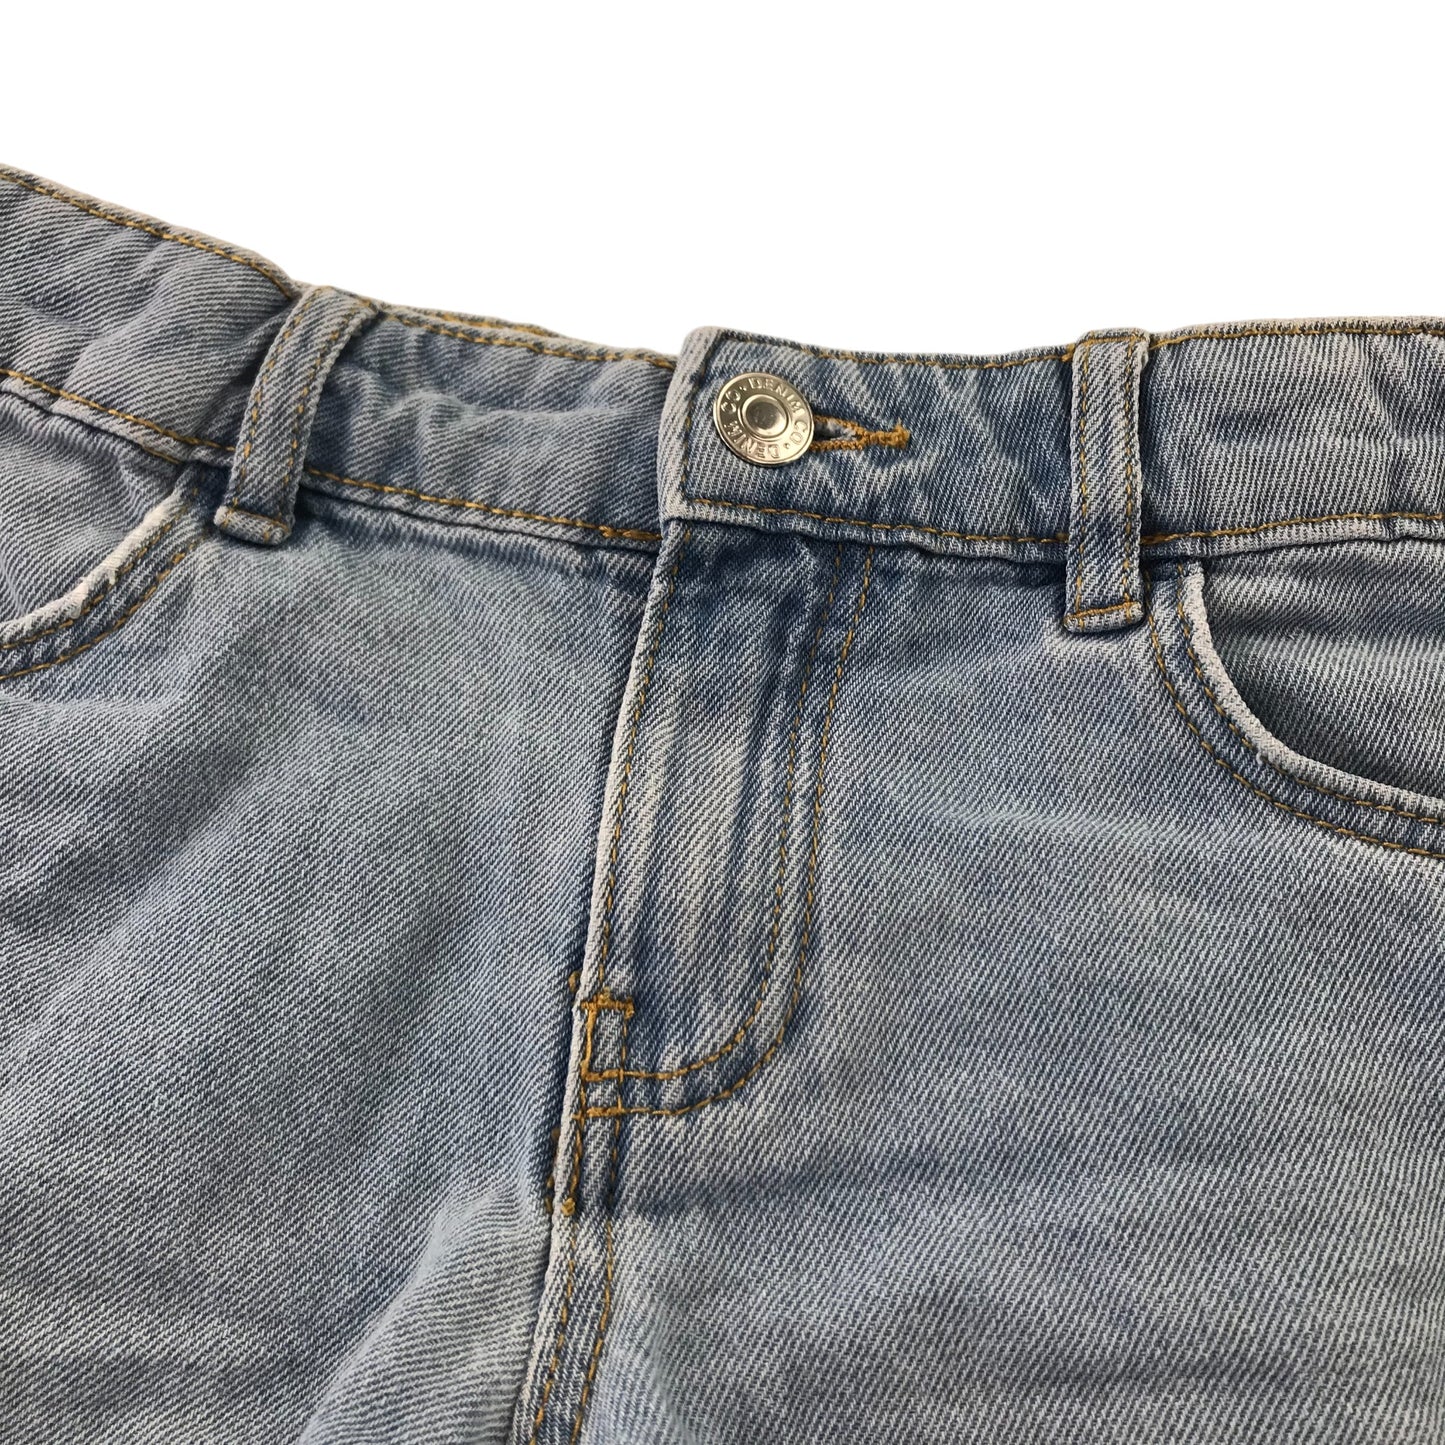 Denim Co shorts 8-9 years blue denim folded hem mid rise cotton